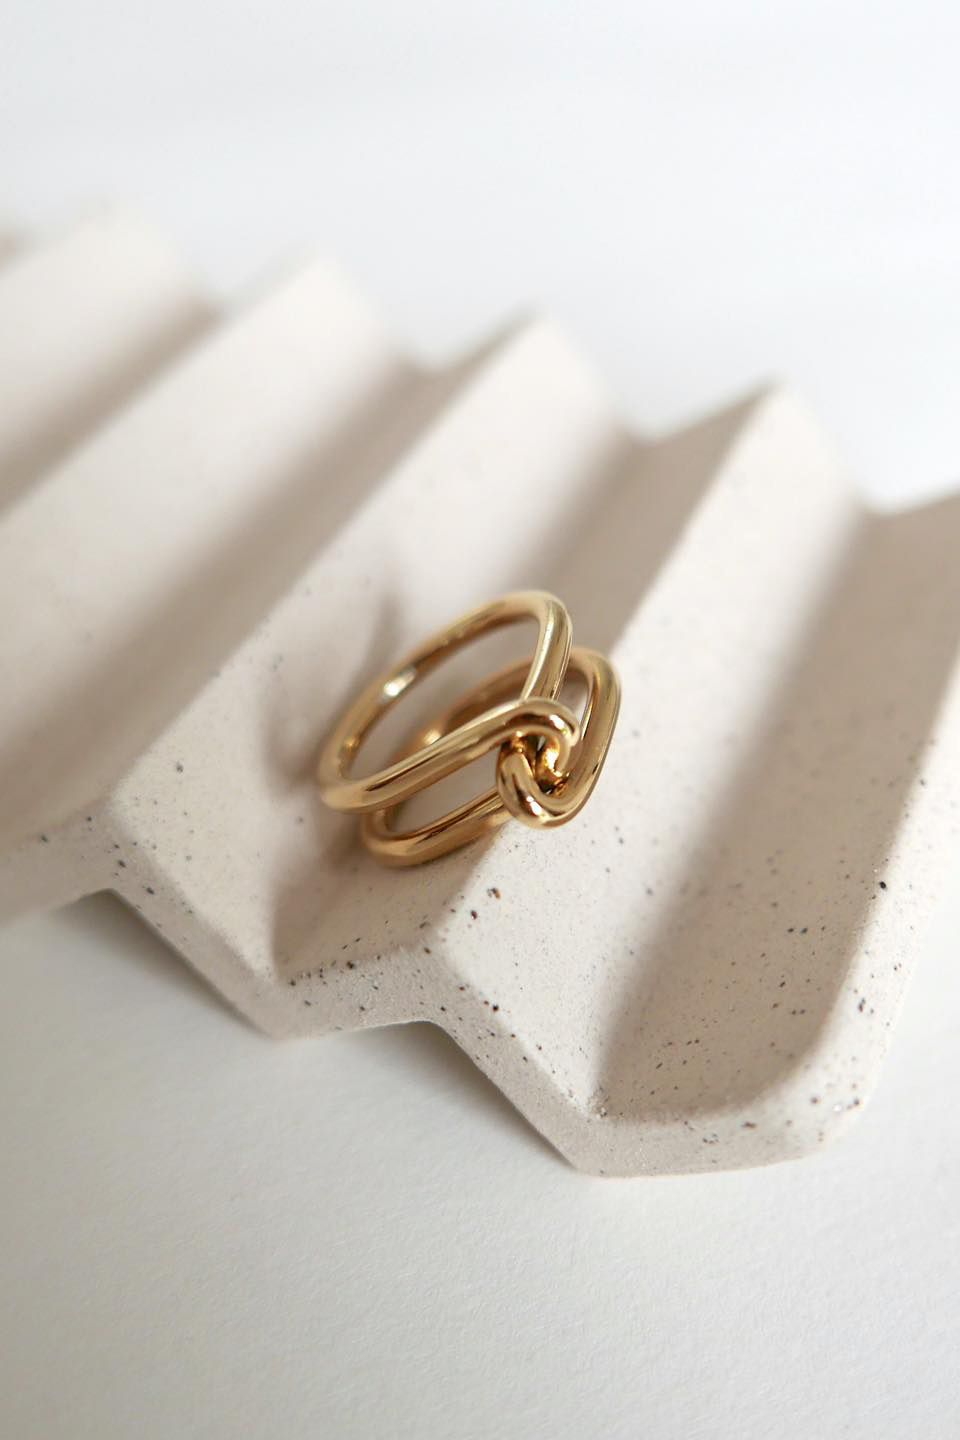 Bandhu Wire Ring - Gold